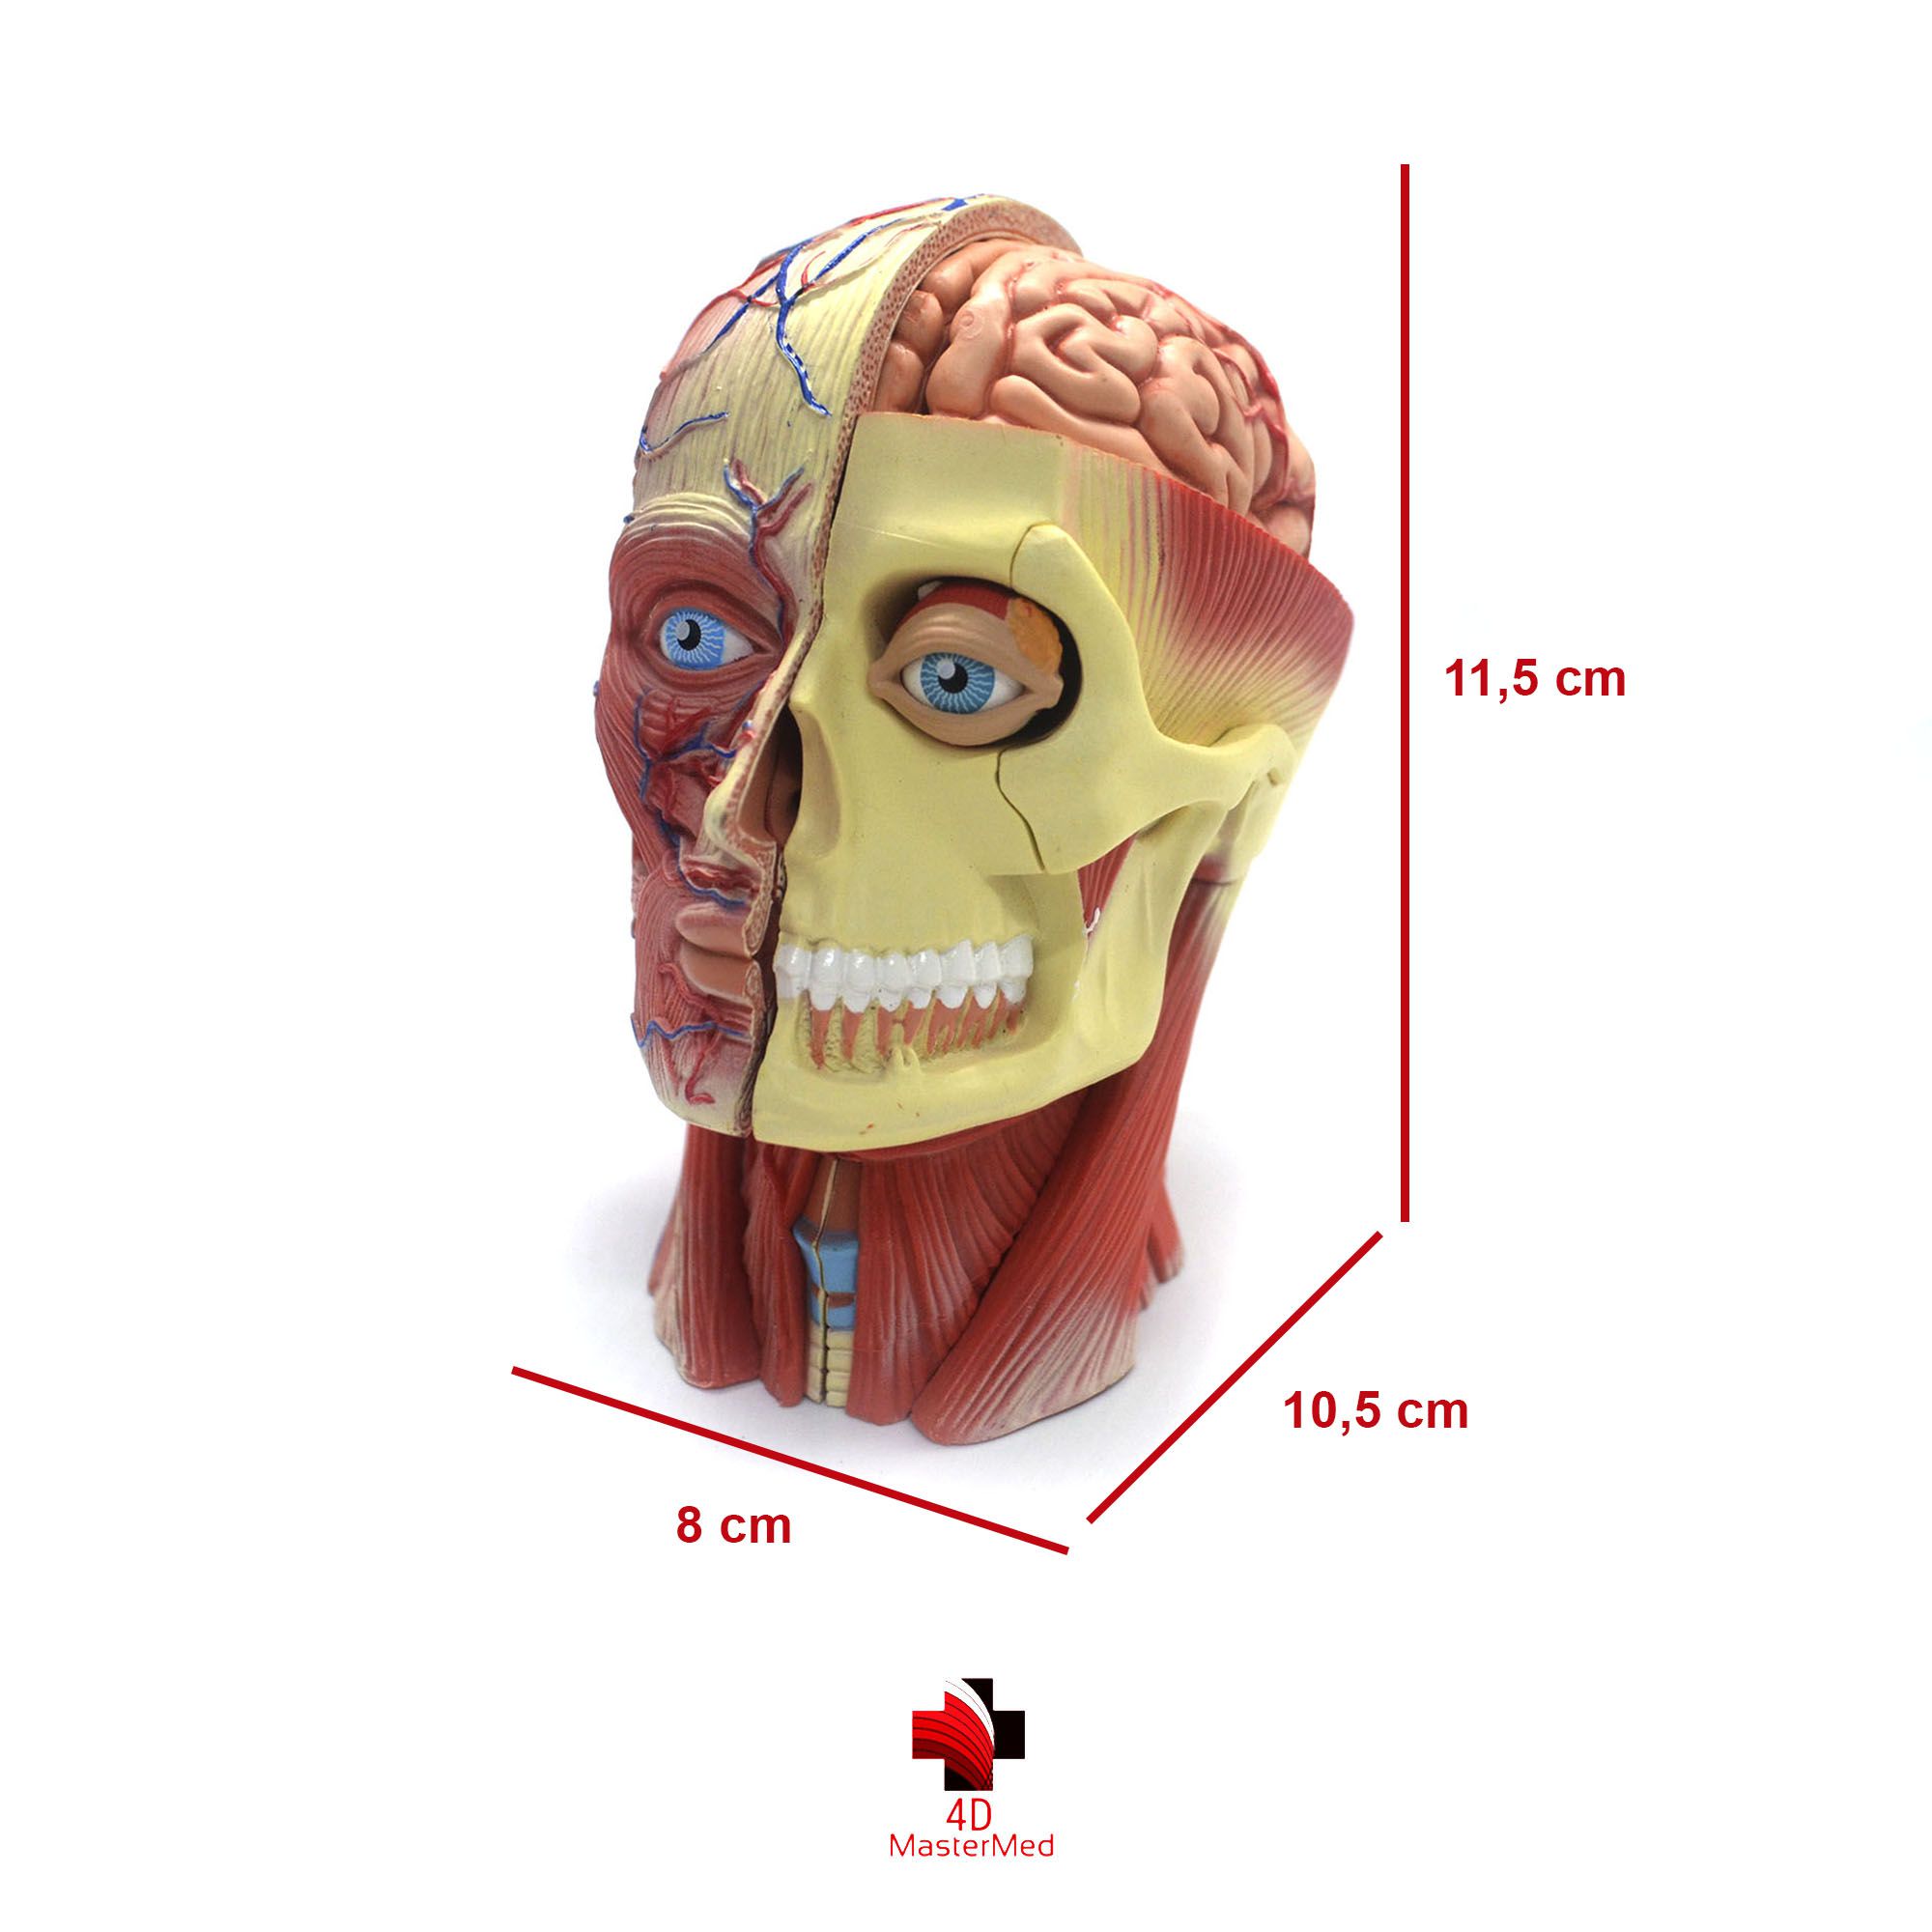 Kit anatomia humana - Crânio e Nervos, Cérebro e Cabeça  - 4D MasterMed